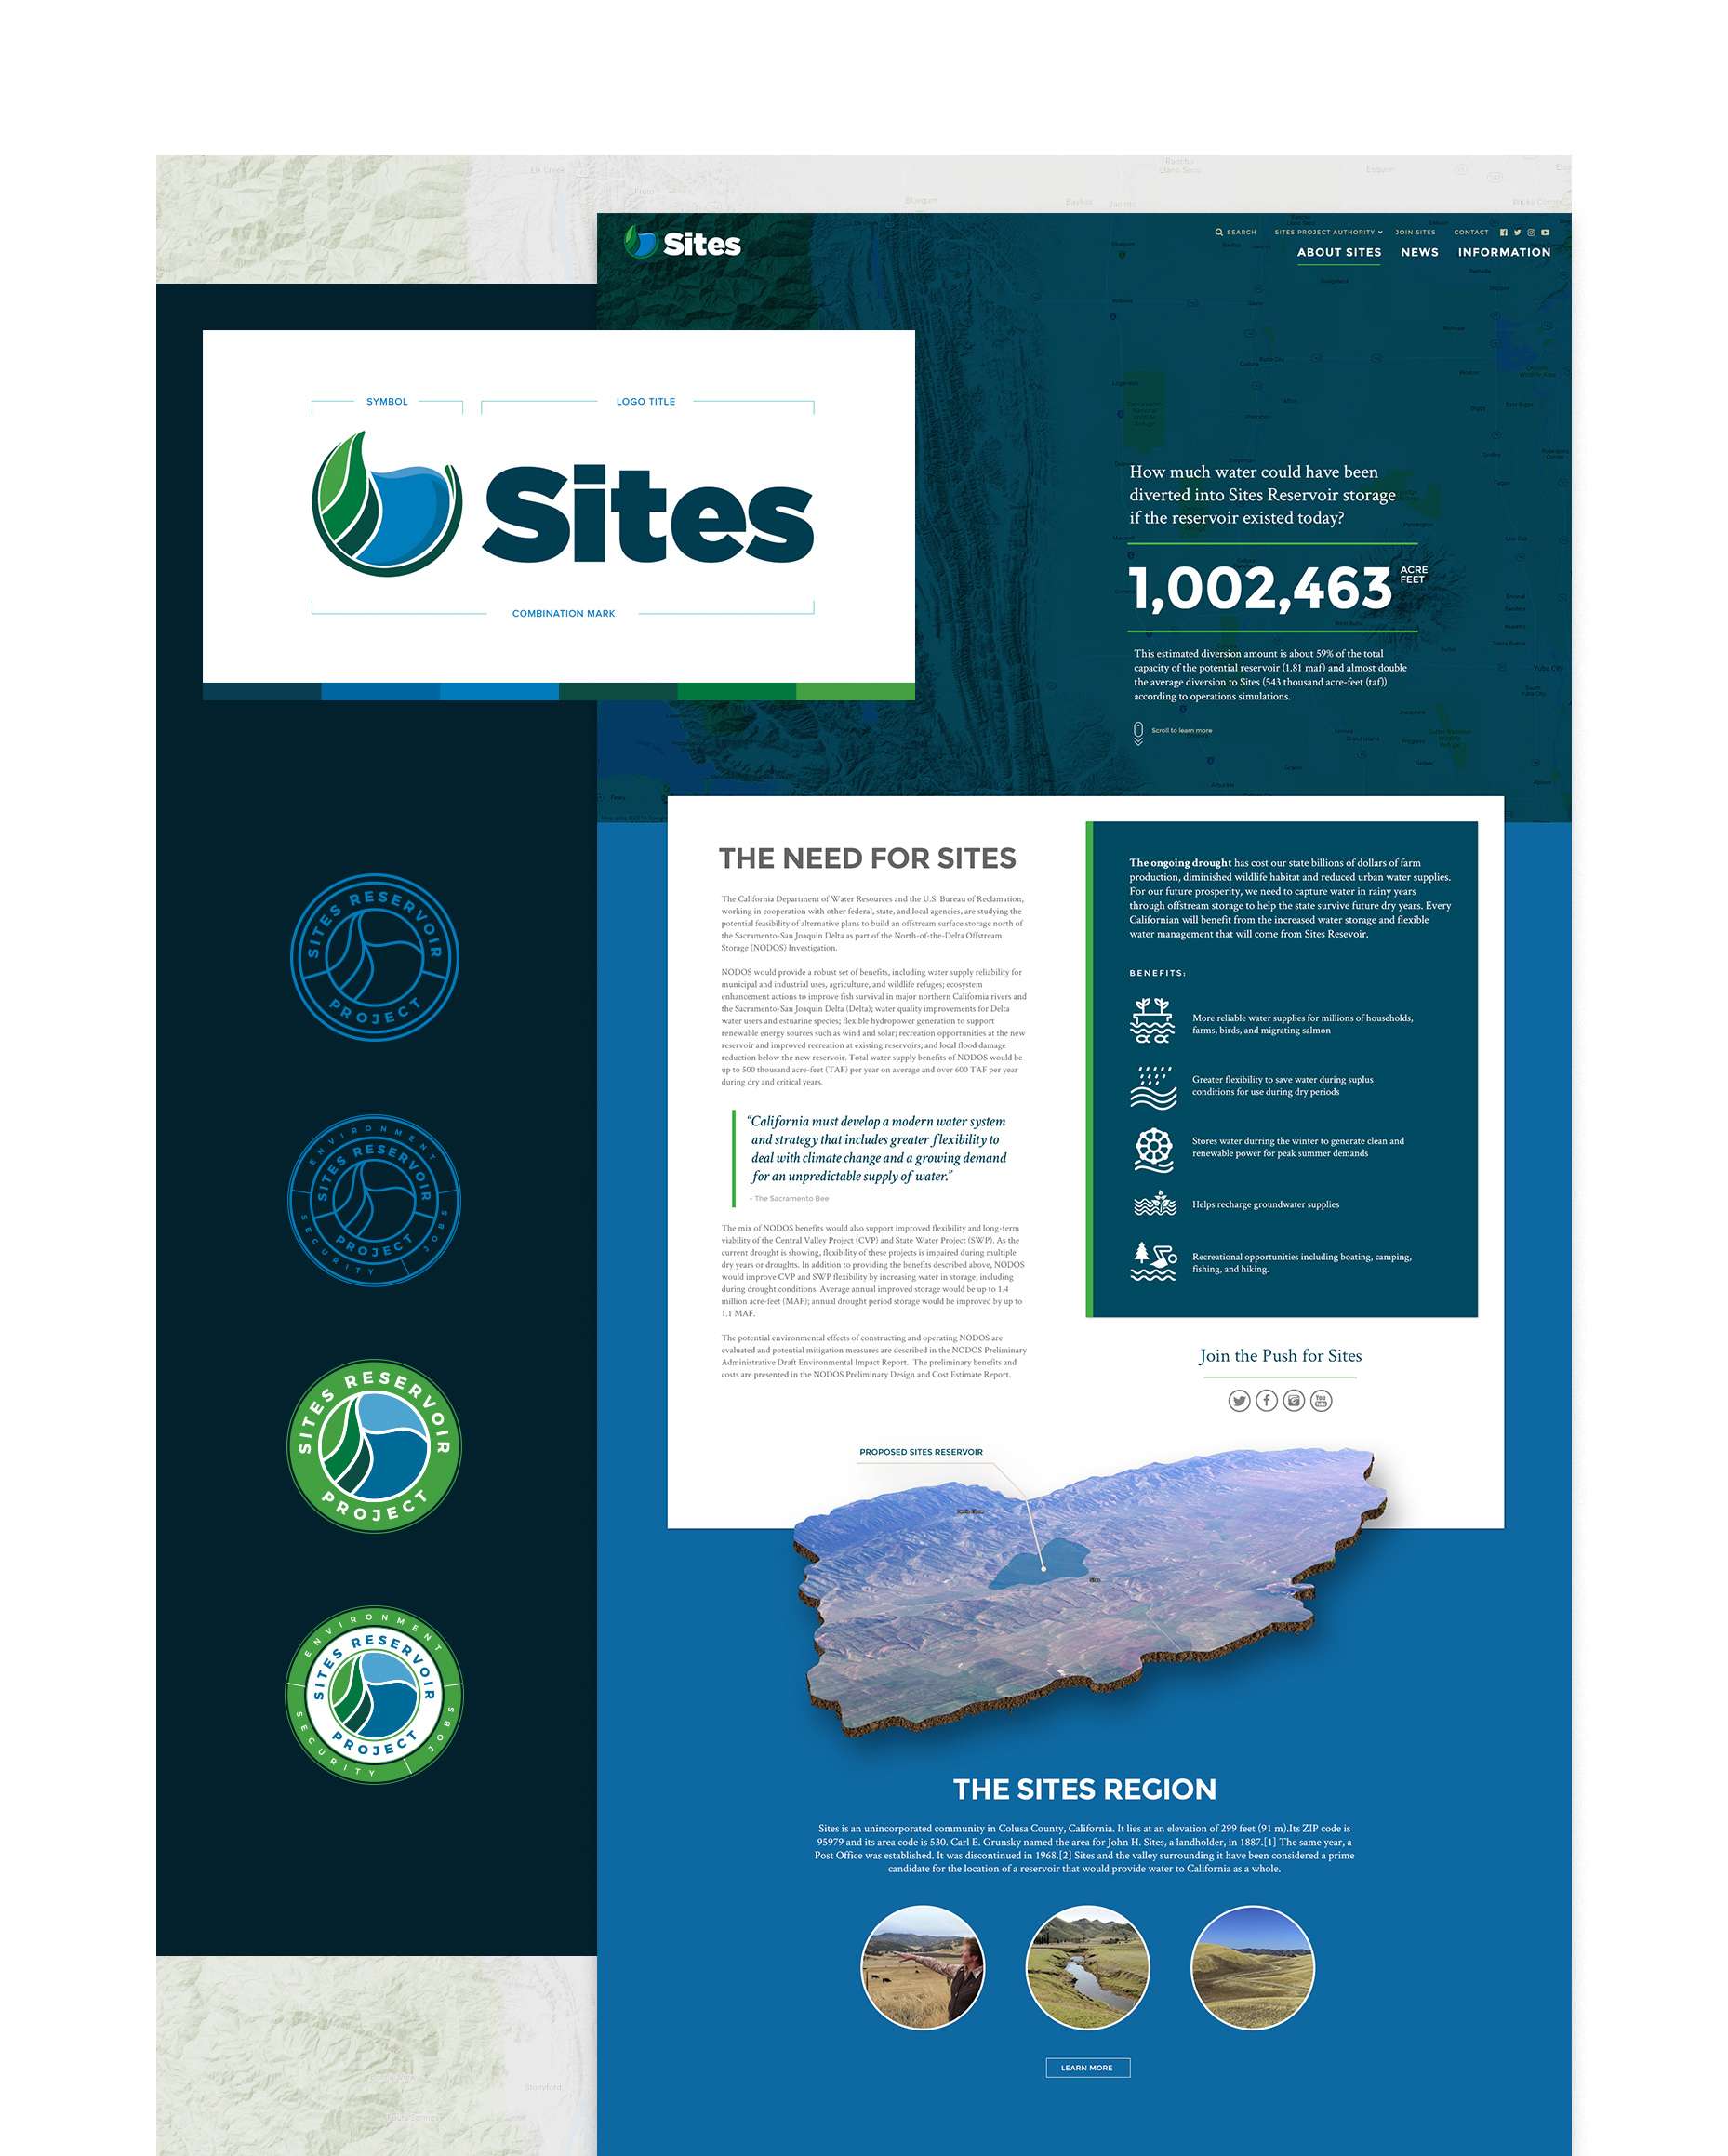 Joint Medias | Sites Reservoir Project logo design sample and website home page rendering.